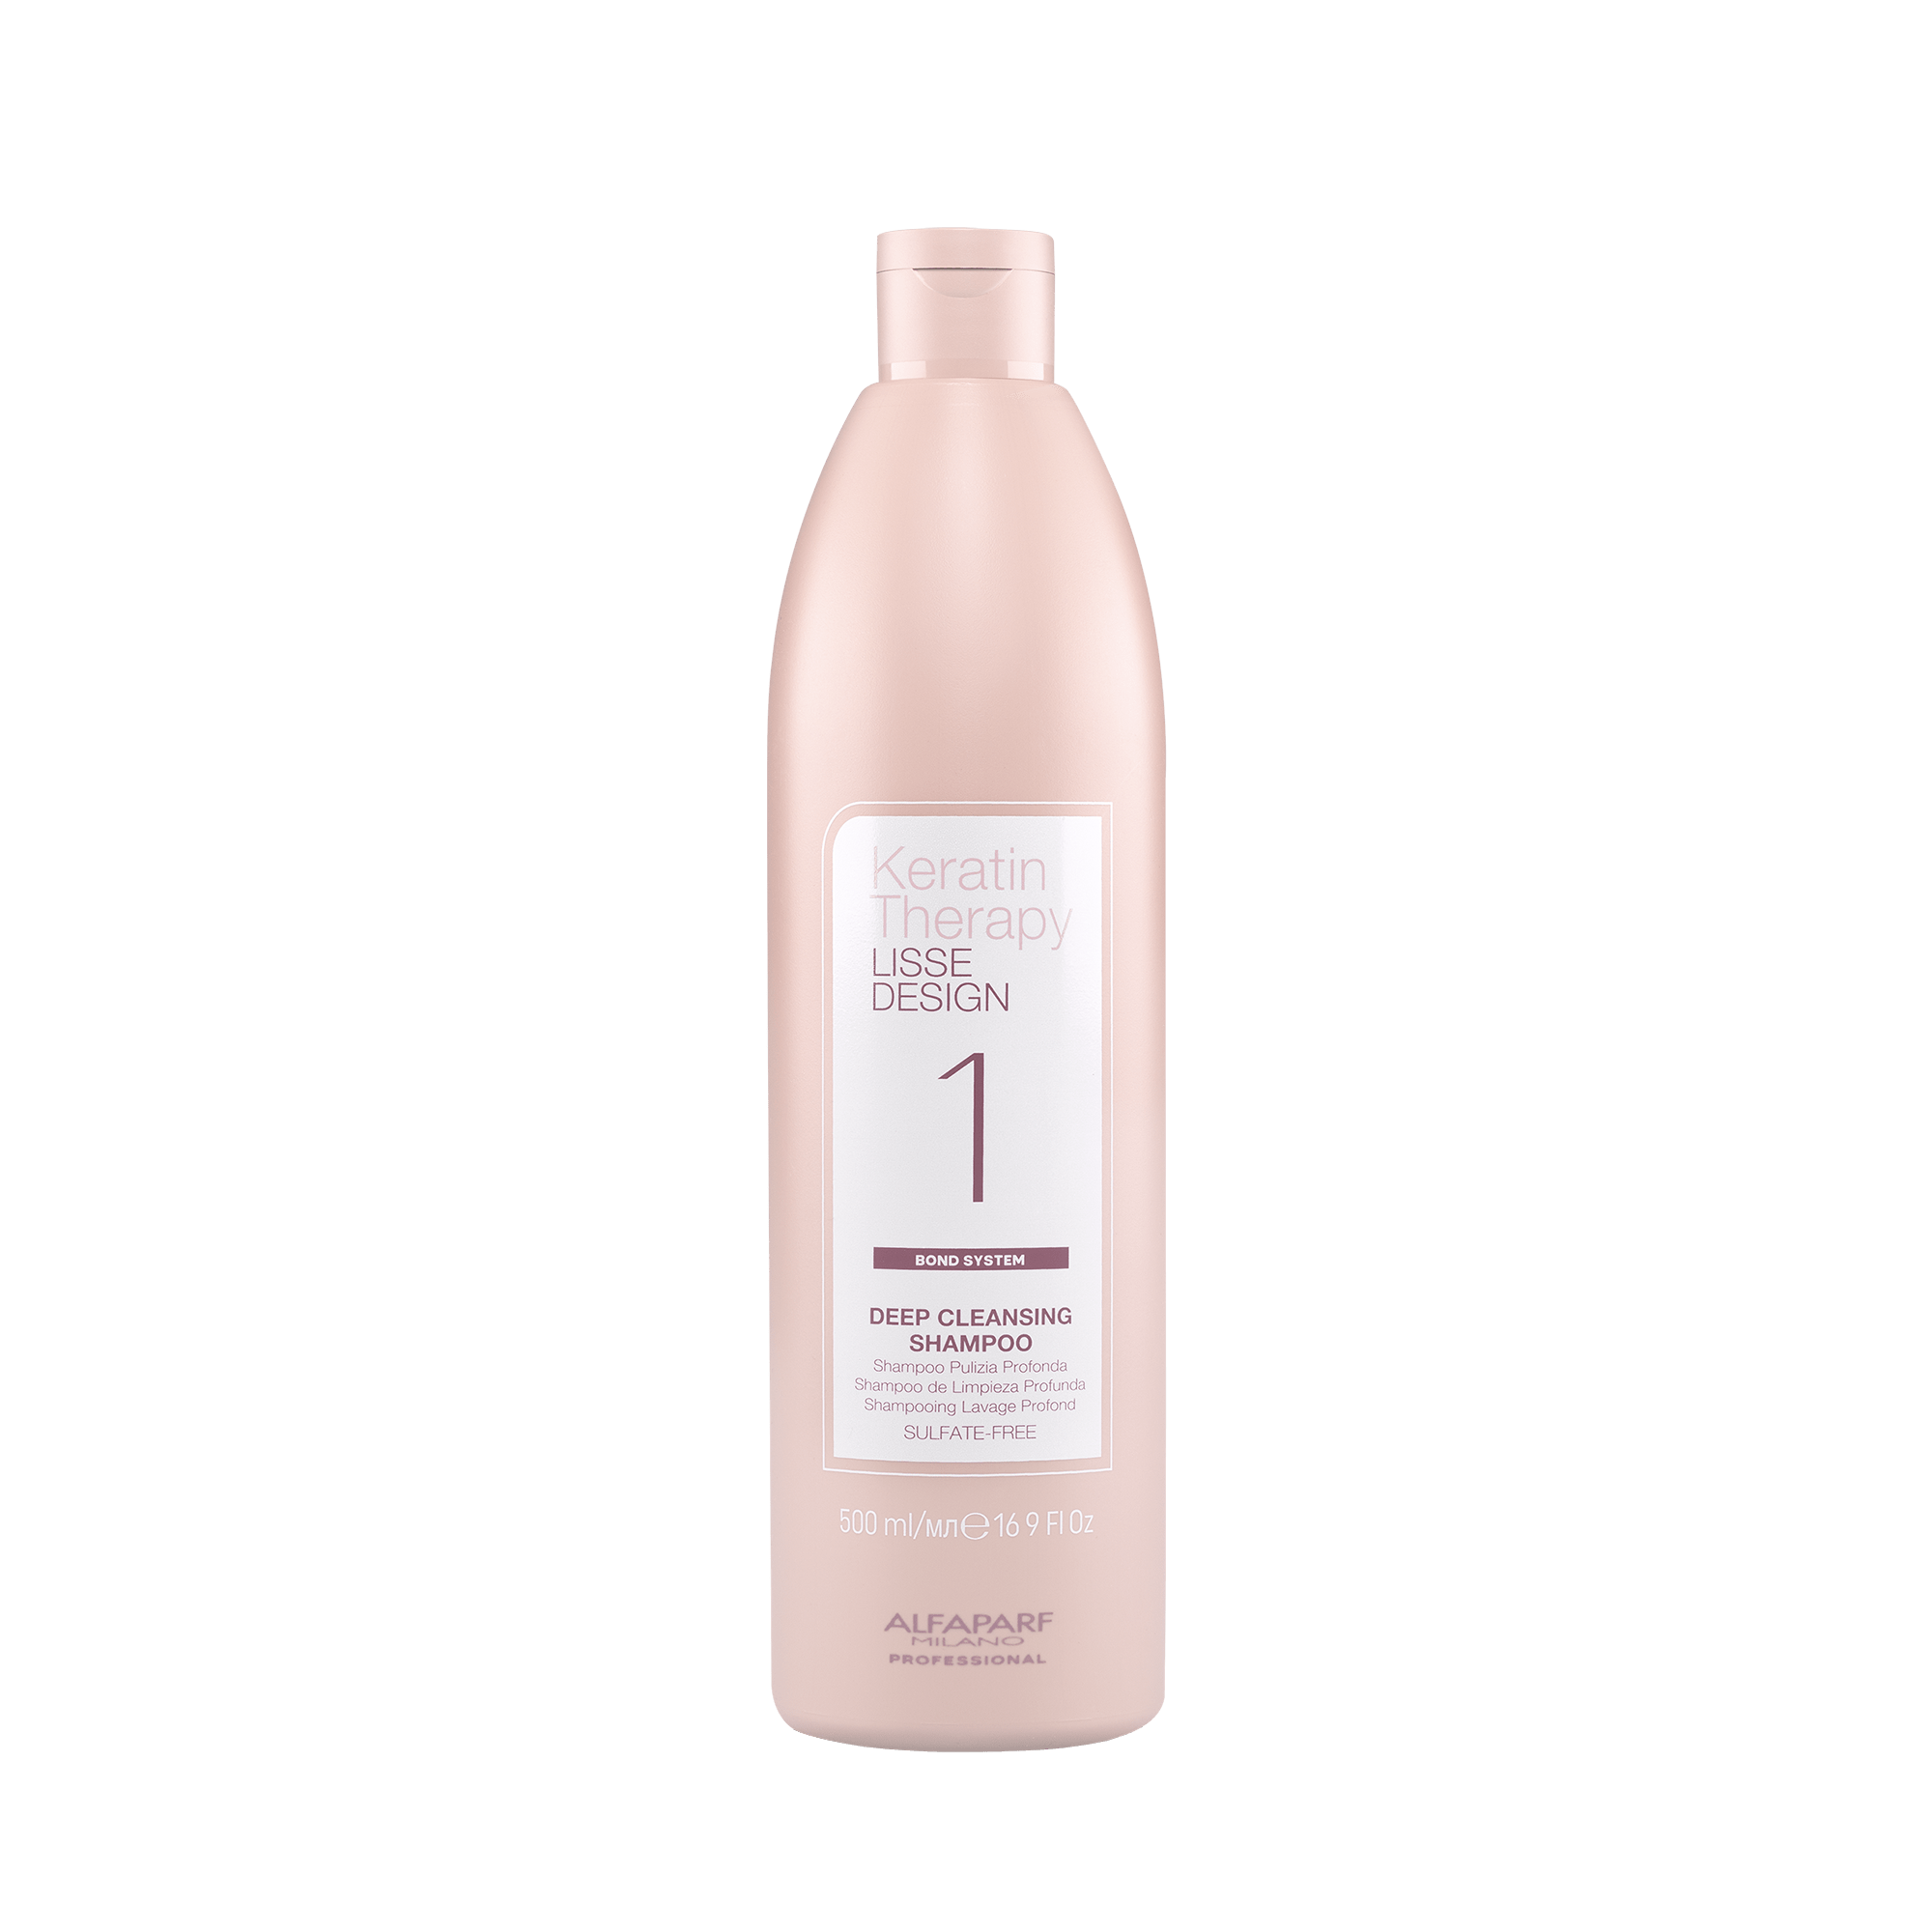 Alfaparf Keratin Therapy Lisse Design Deep Cleansing Shampoo 500ml